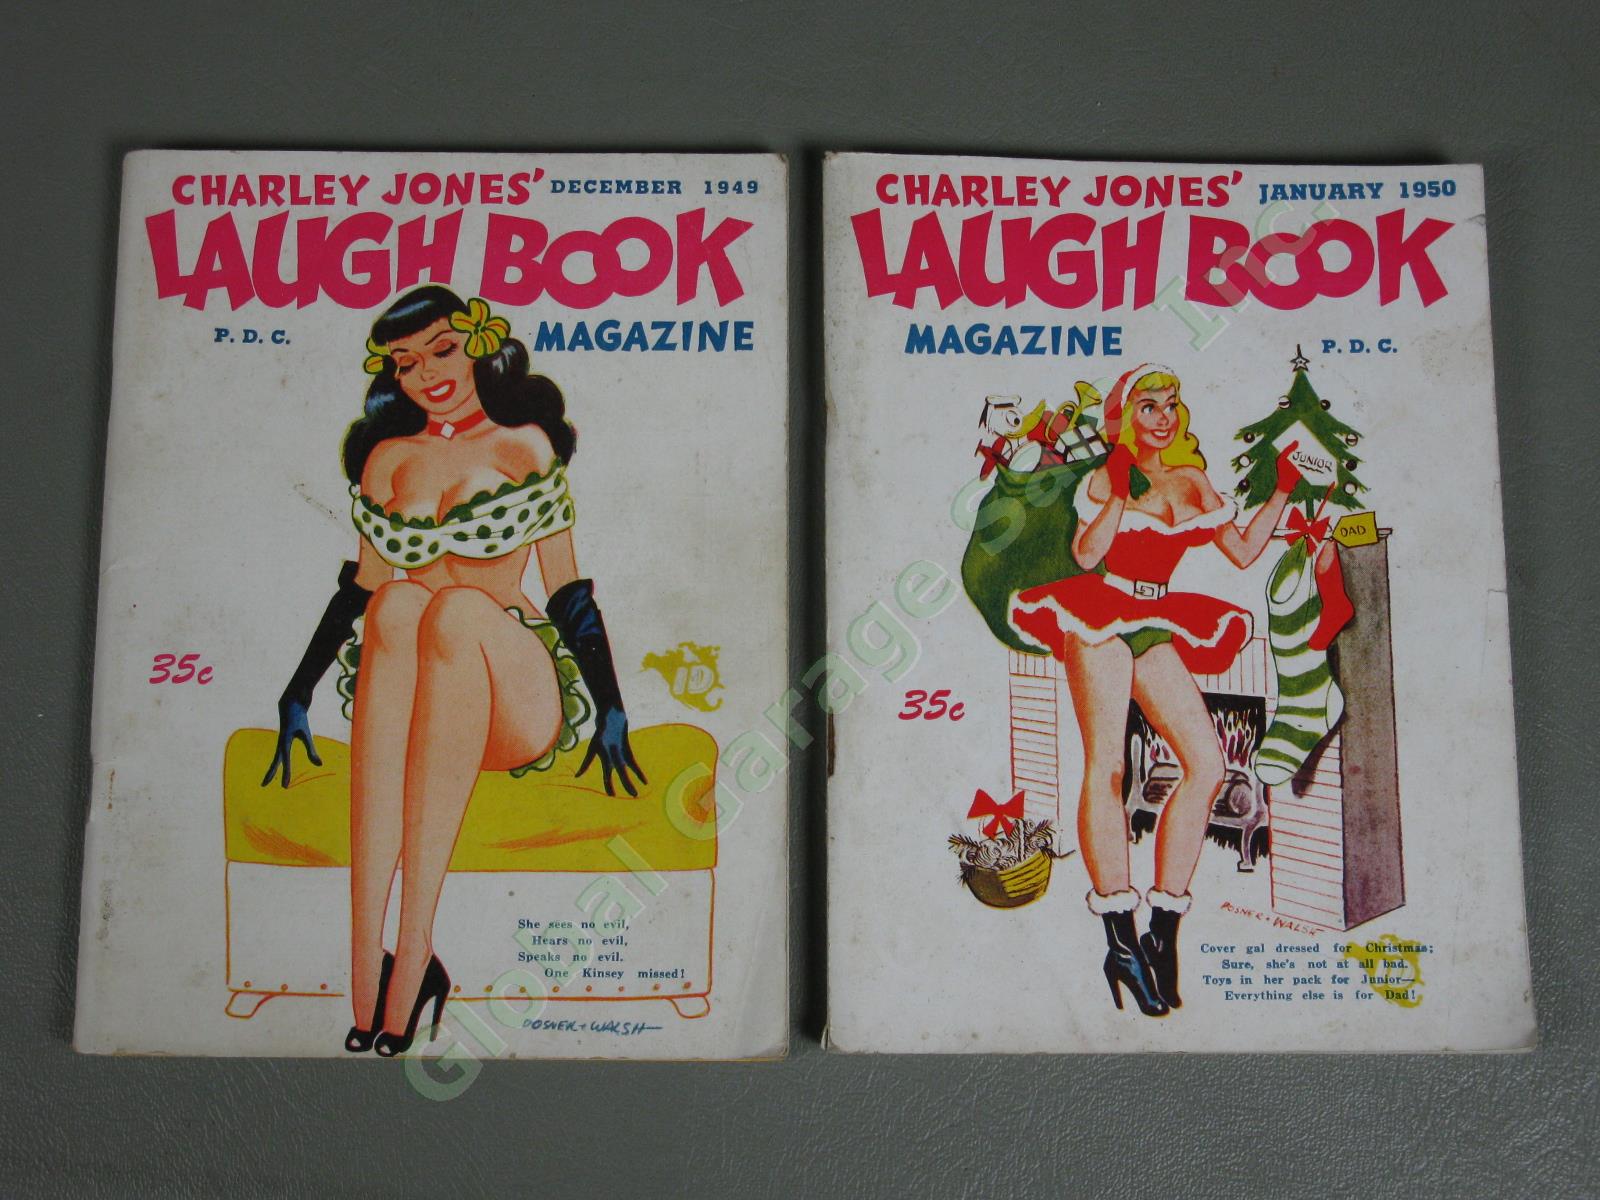 22 Vintage 1947-1950 Charley Jones Laugh Book Magazines Lot Risque Adult Humor 6